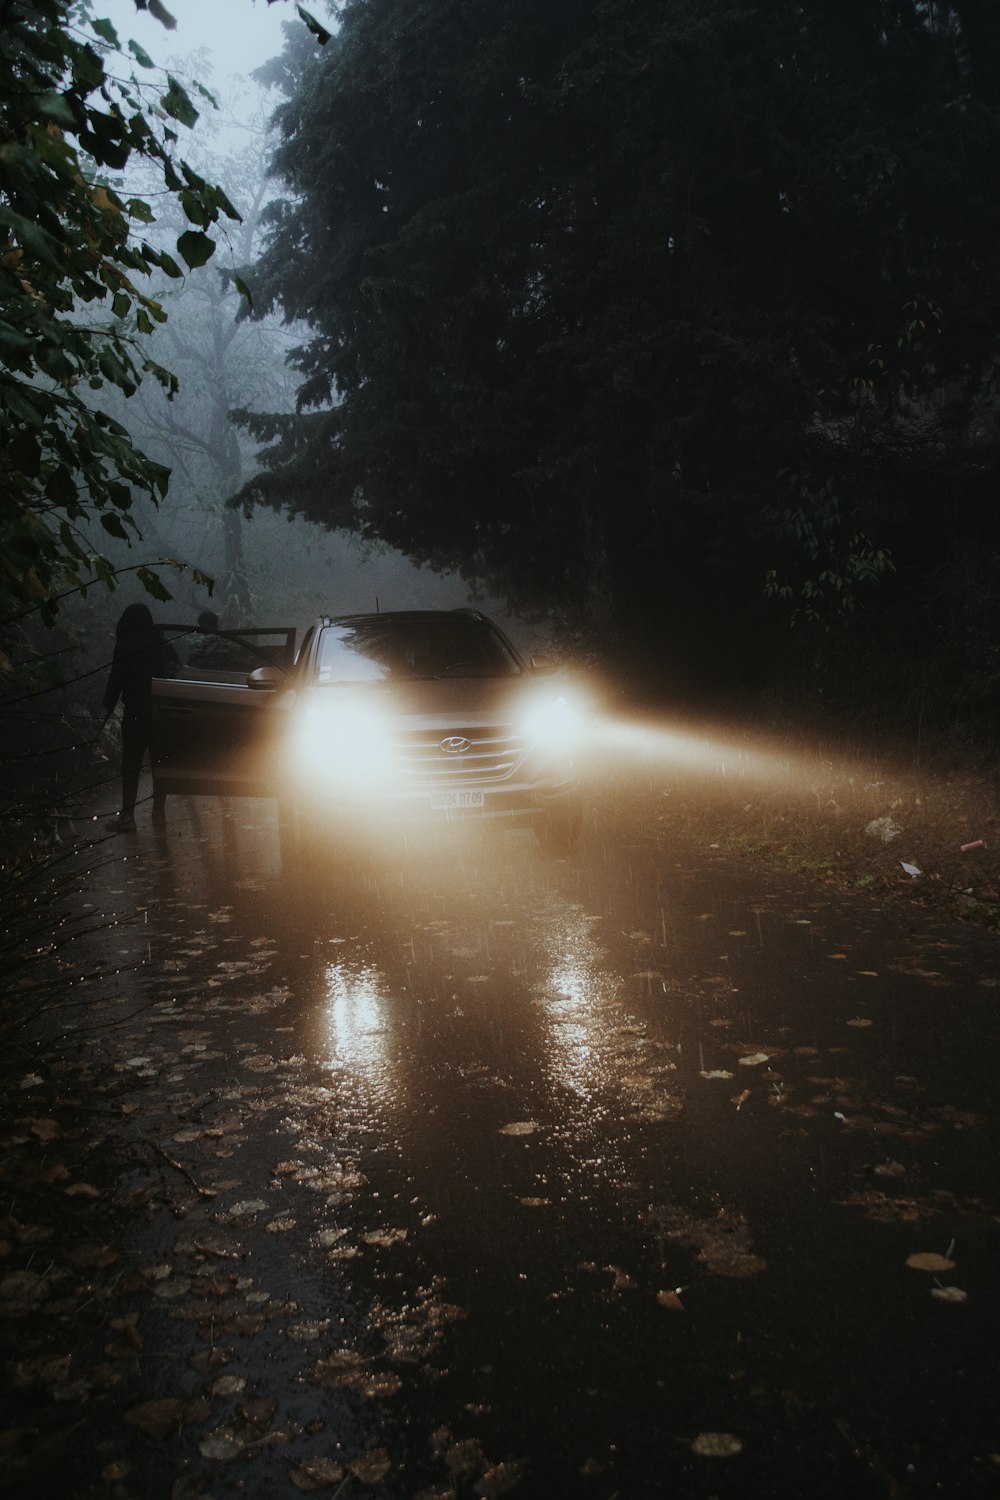 Un coche conduciendo por una carretera empapada por la lluvia